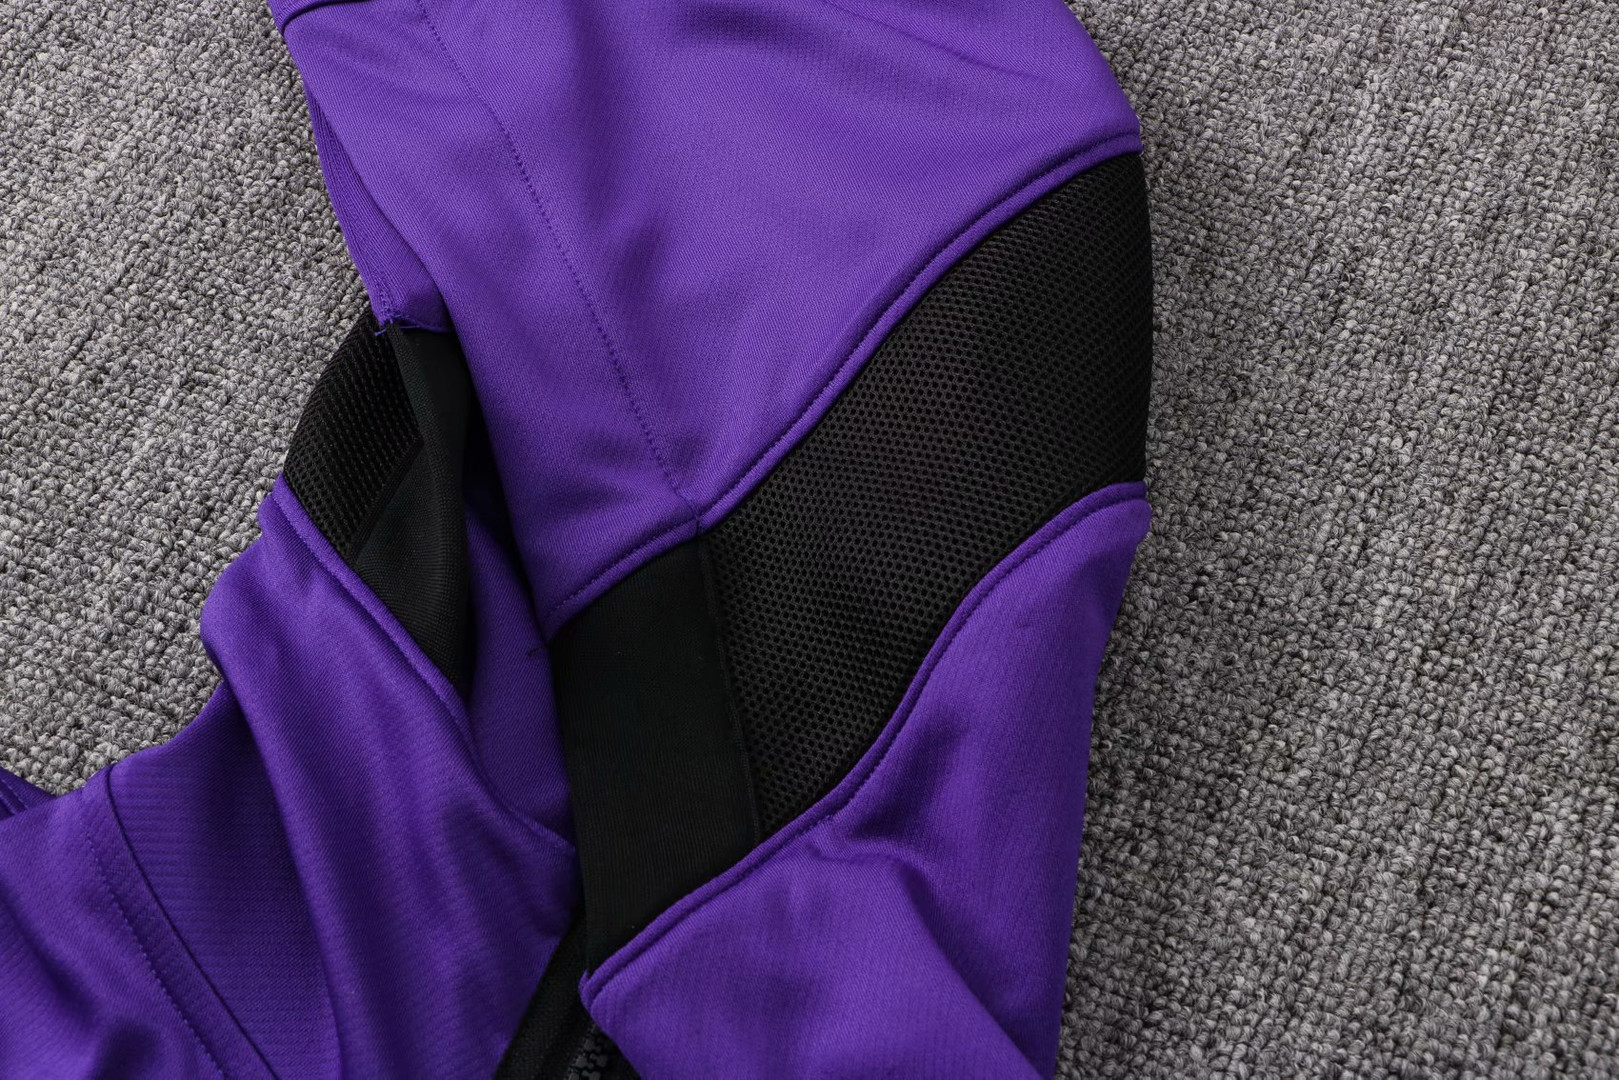 21/22 LA Lakers Hoodie Purple Soccer Training Suit Jacket + Pants Mens